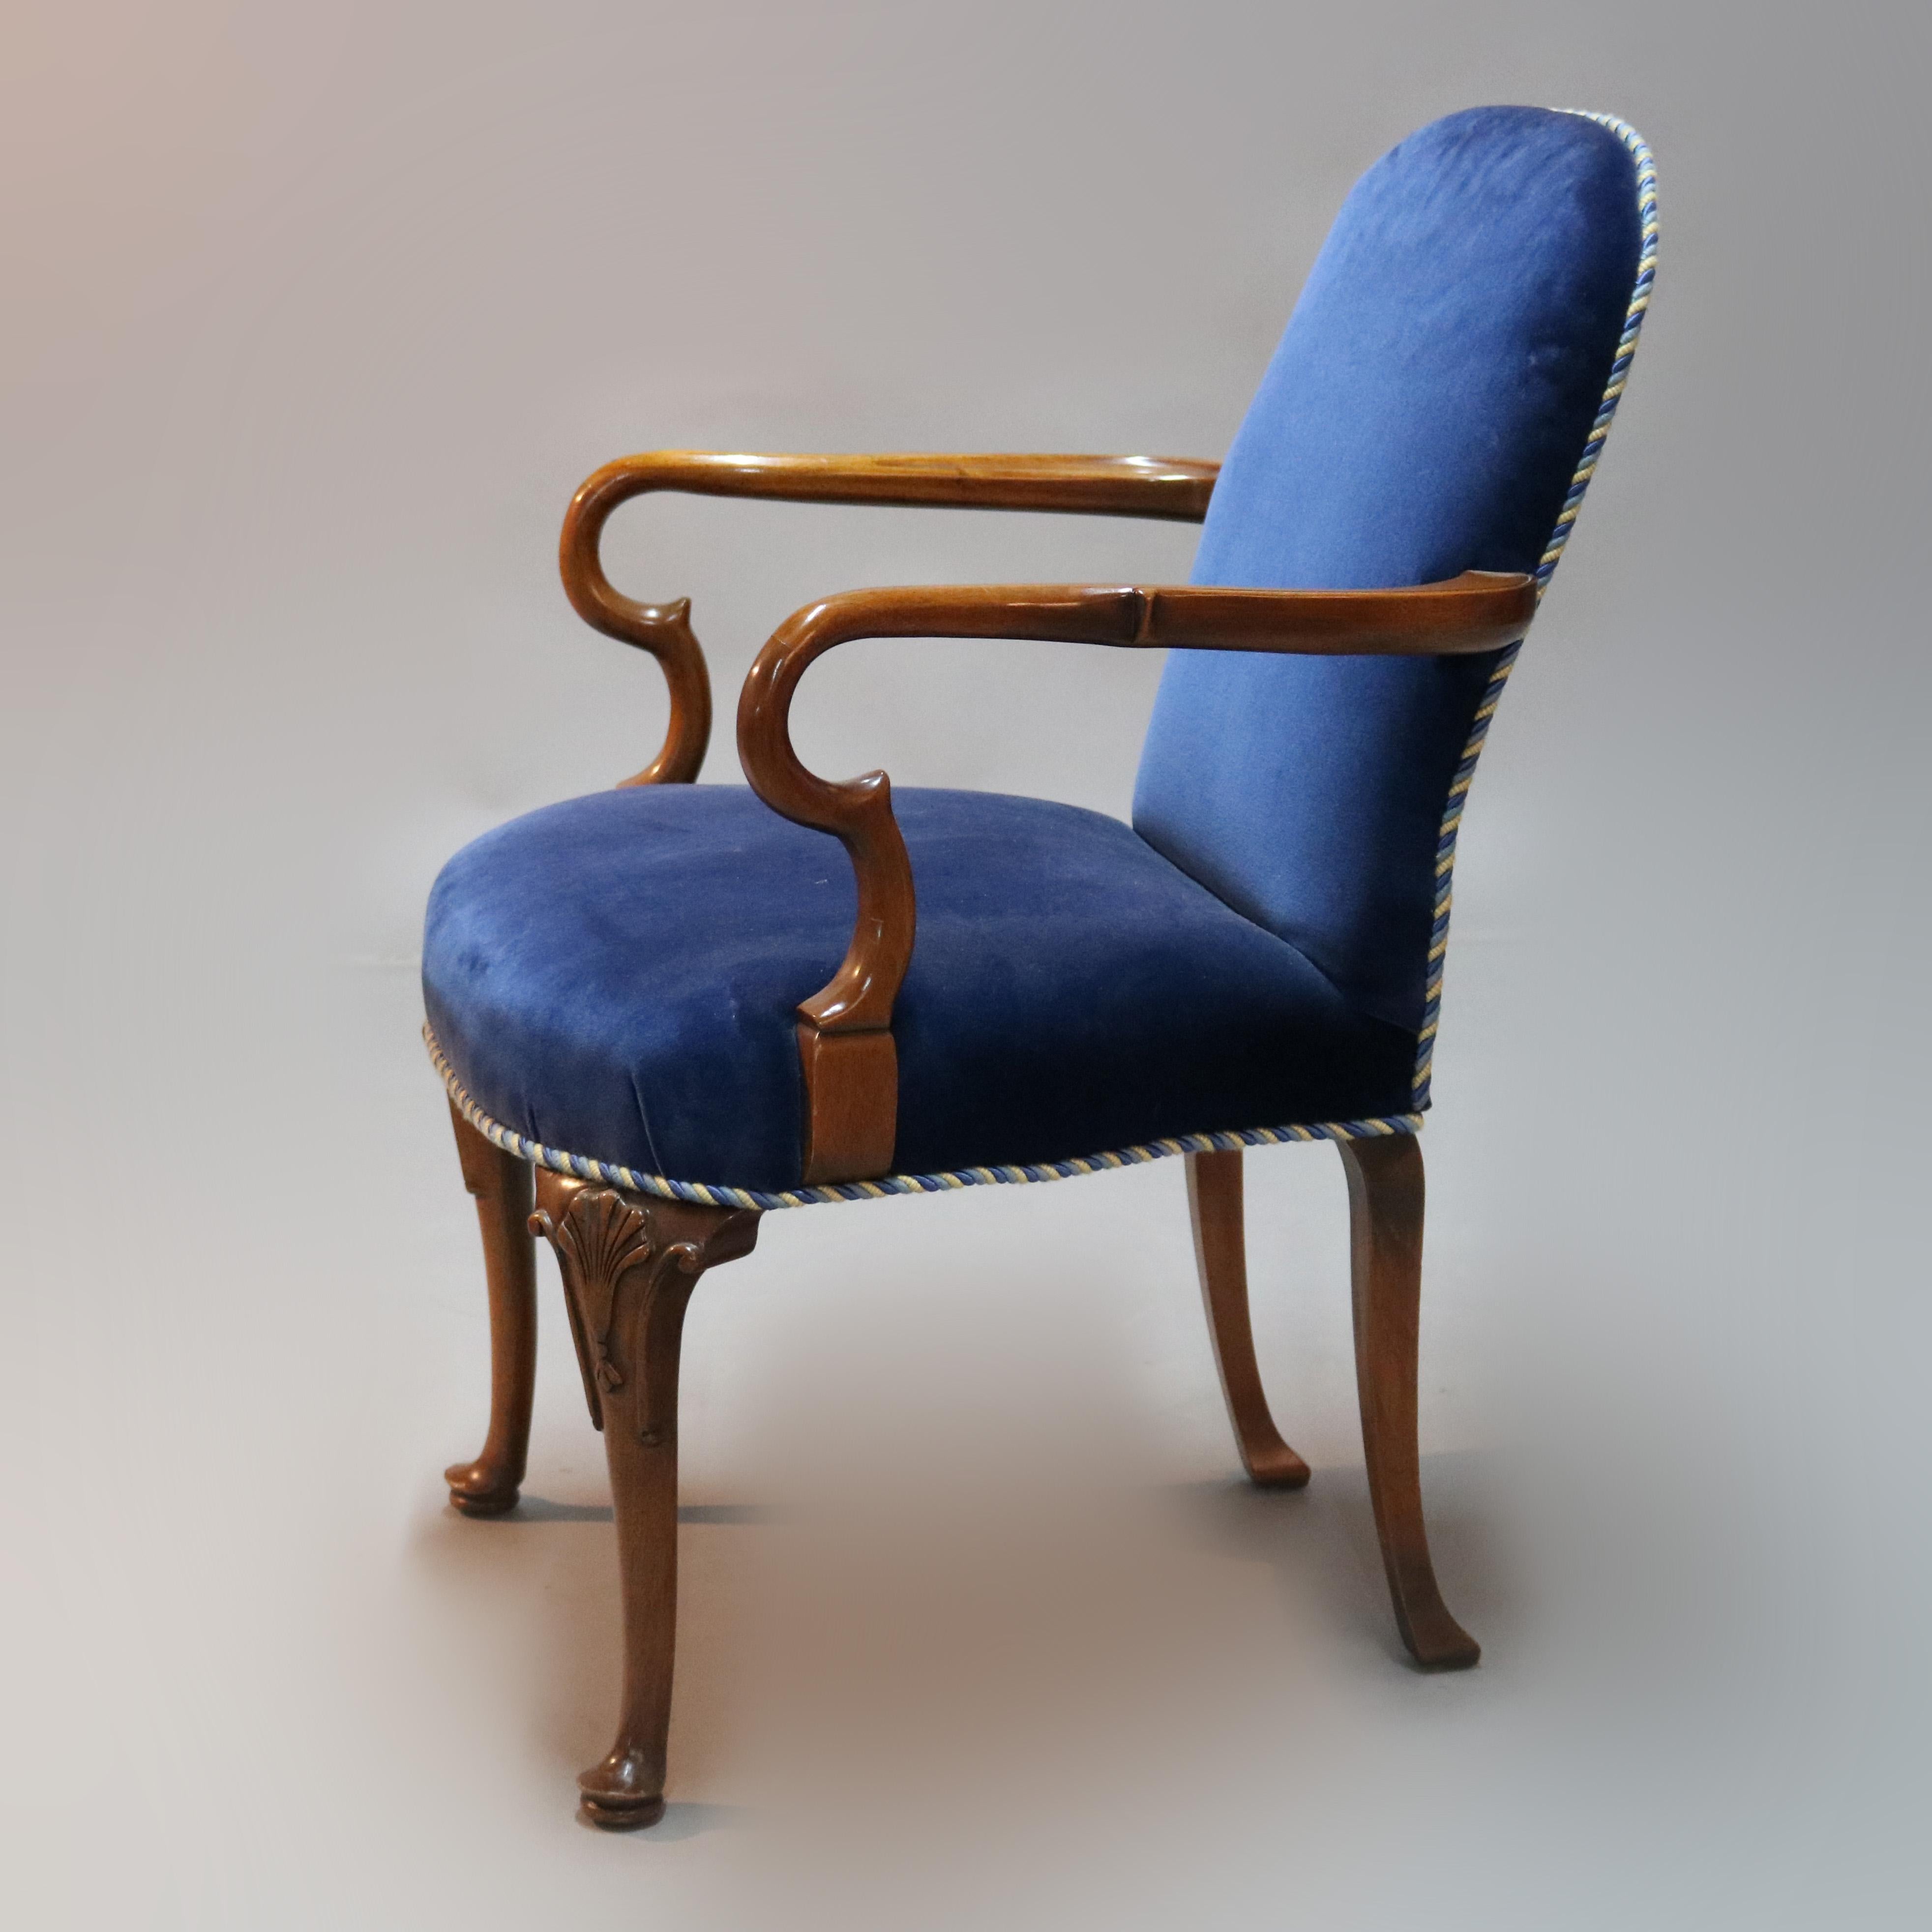 blue antique chair